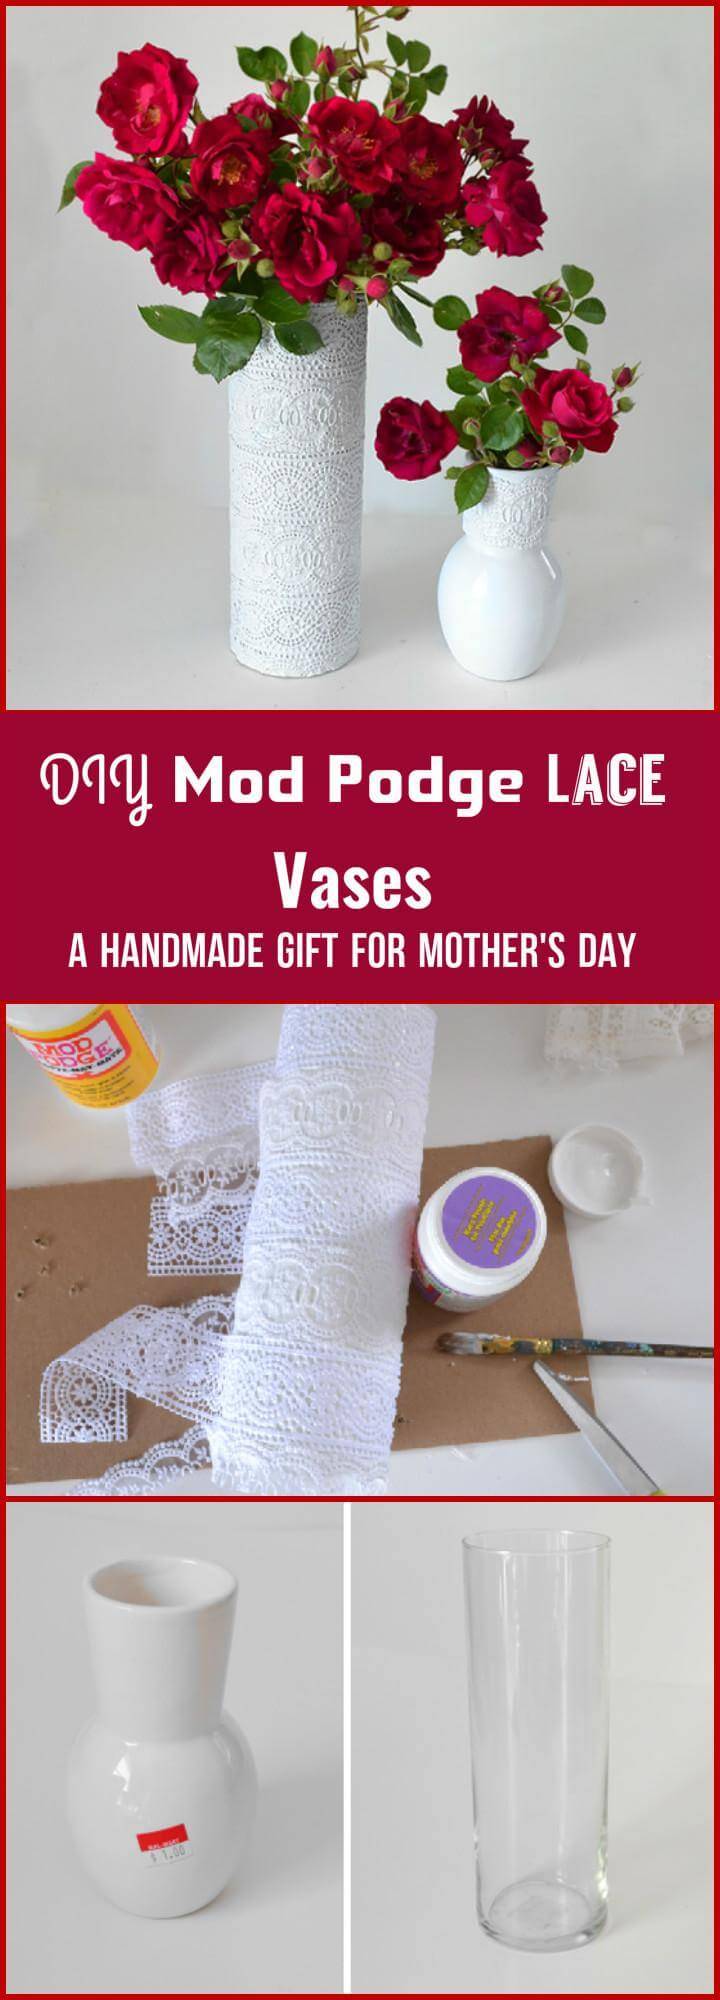 DIY mod podge lace vases Mother's Day gift